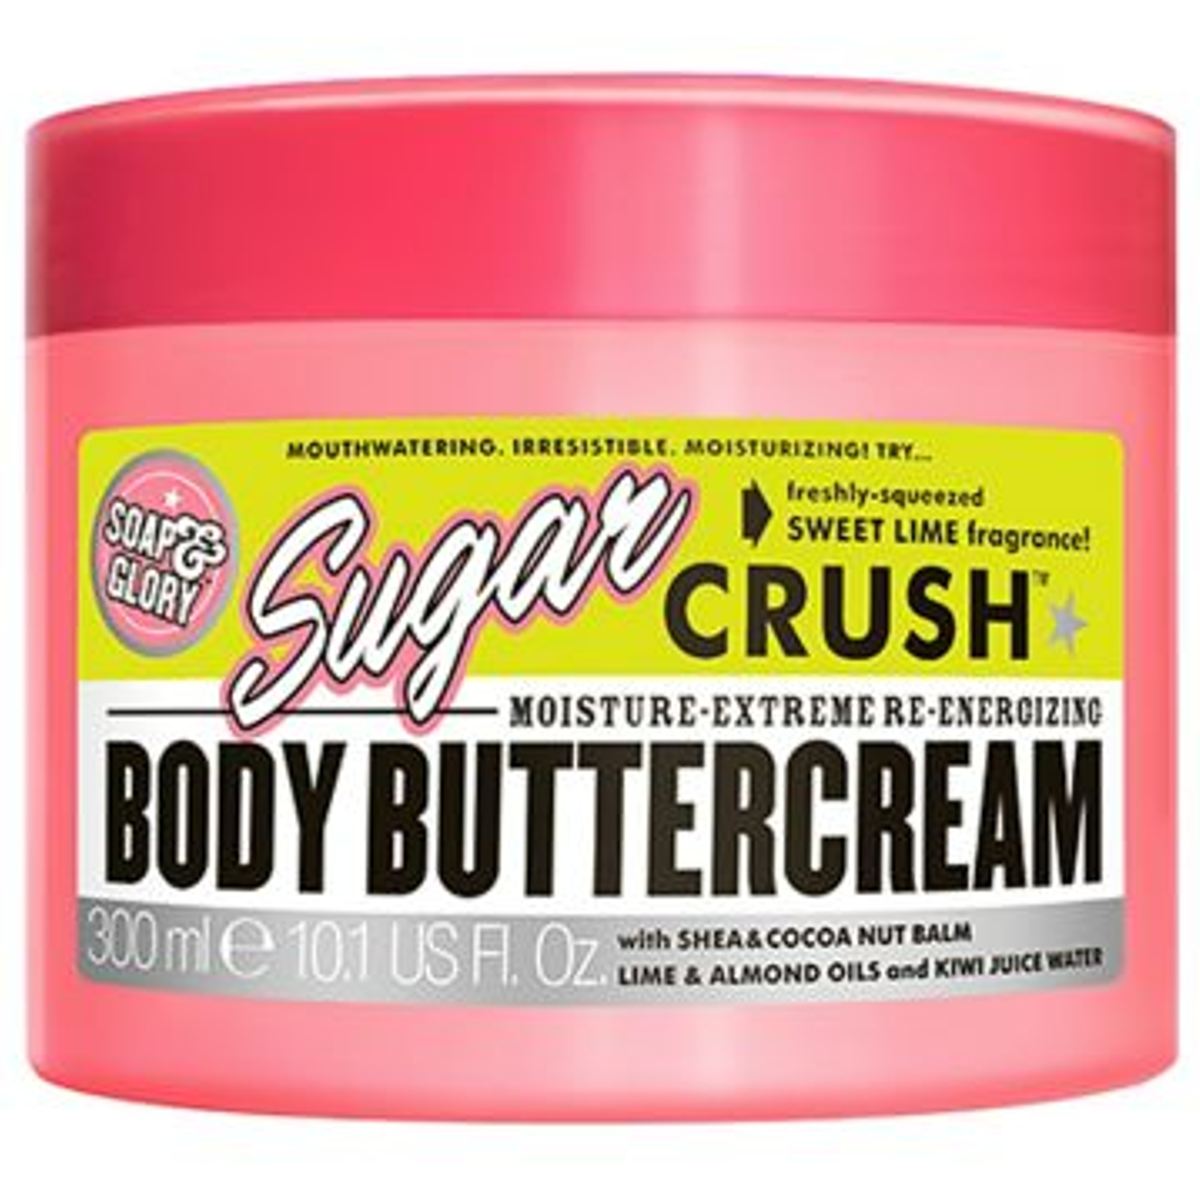 Sugar Crush Moisturising Body Buttercream